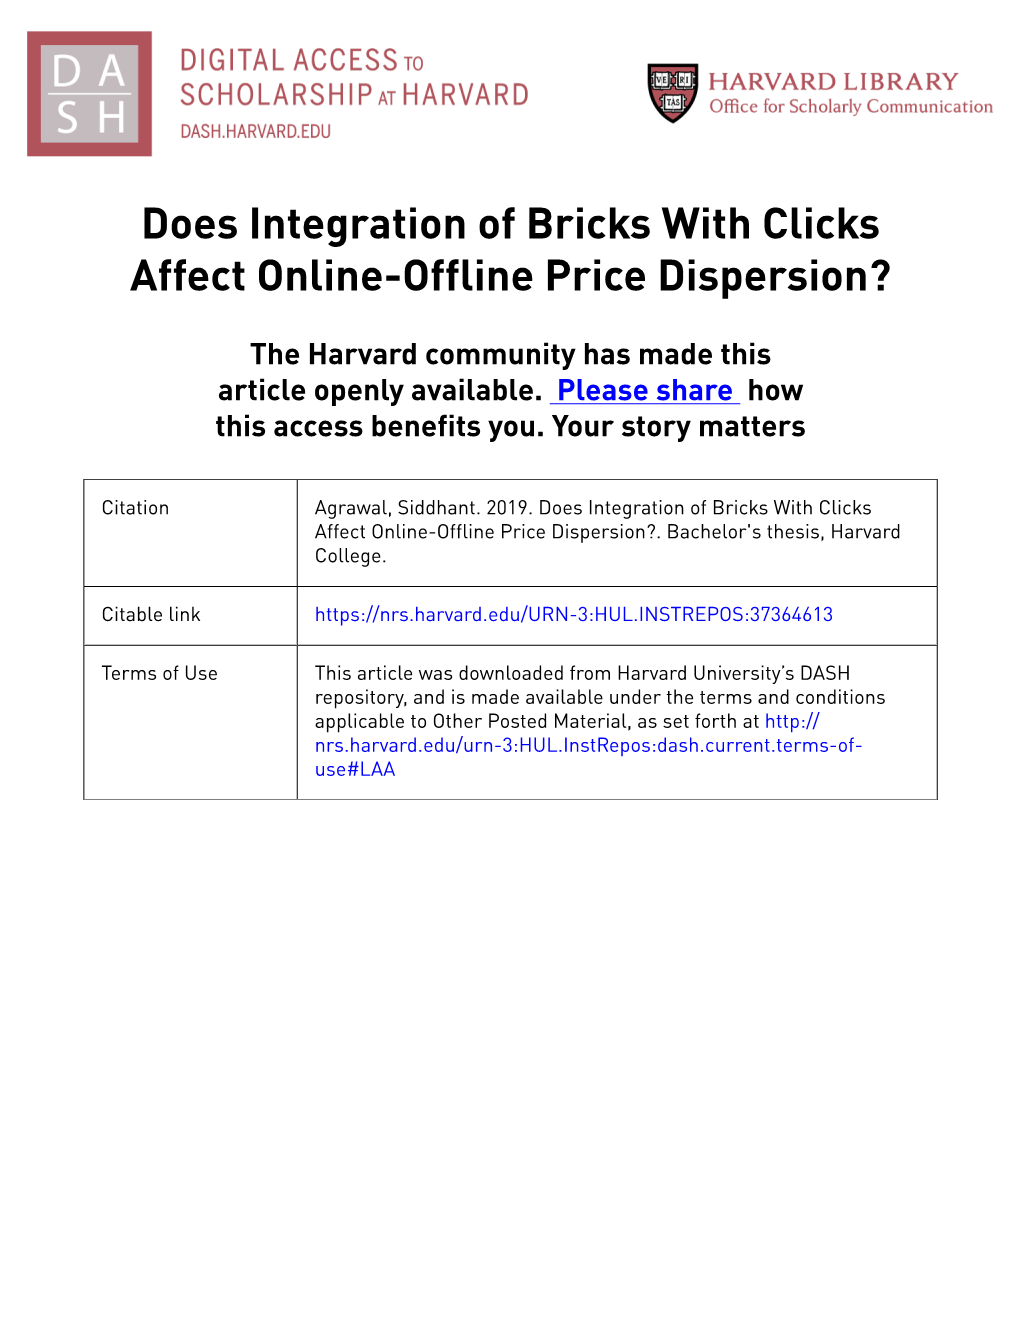 Does Integration of Bricks with Clicks Affect Online-Offline Price Dispersion?